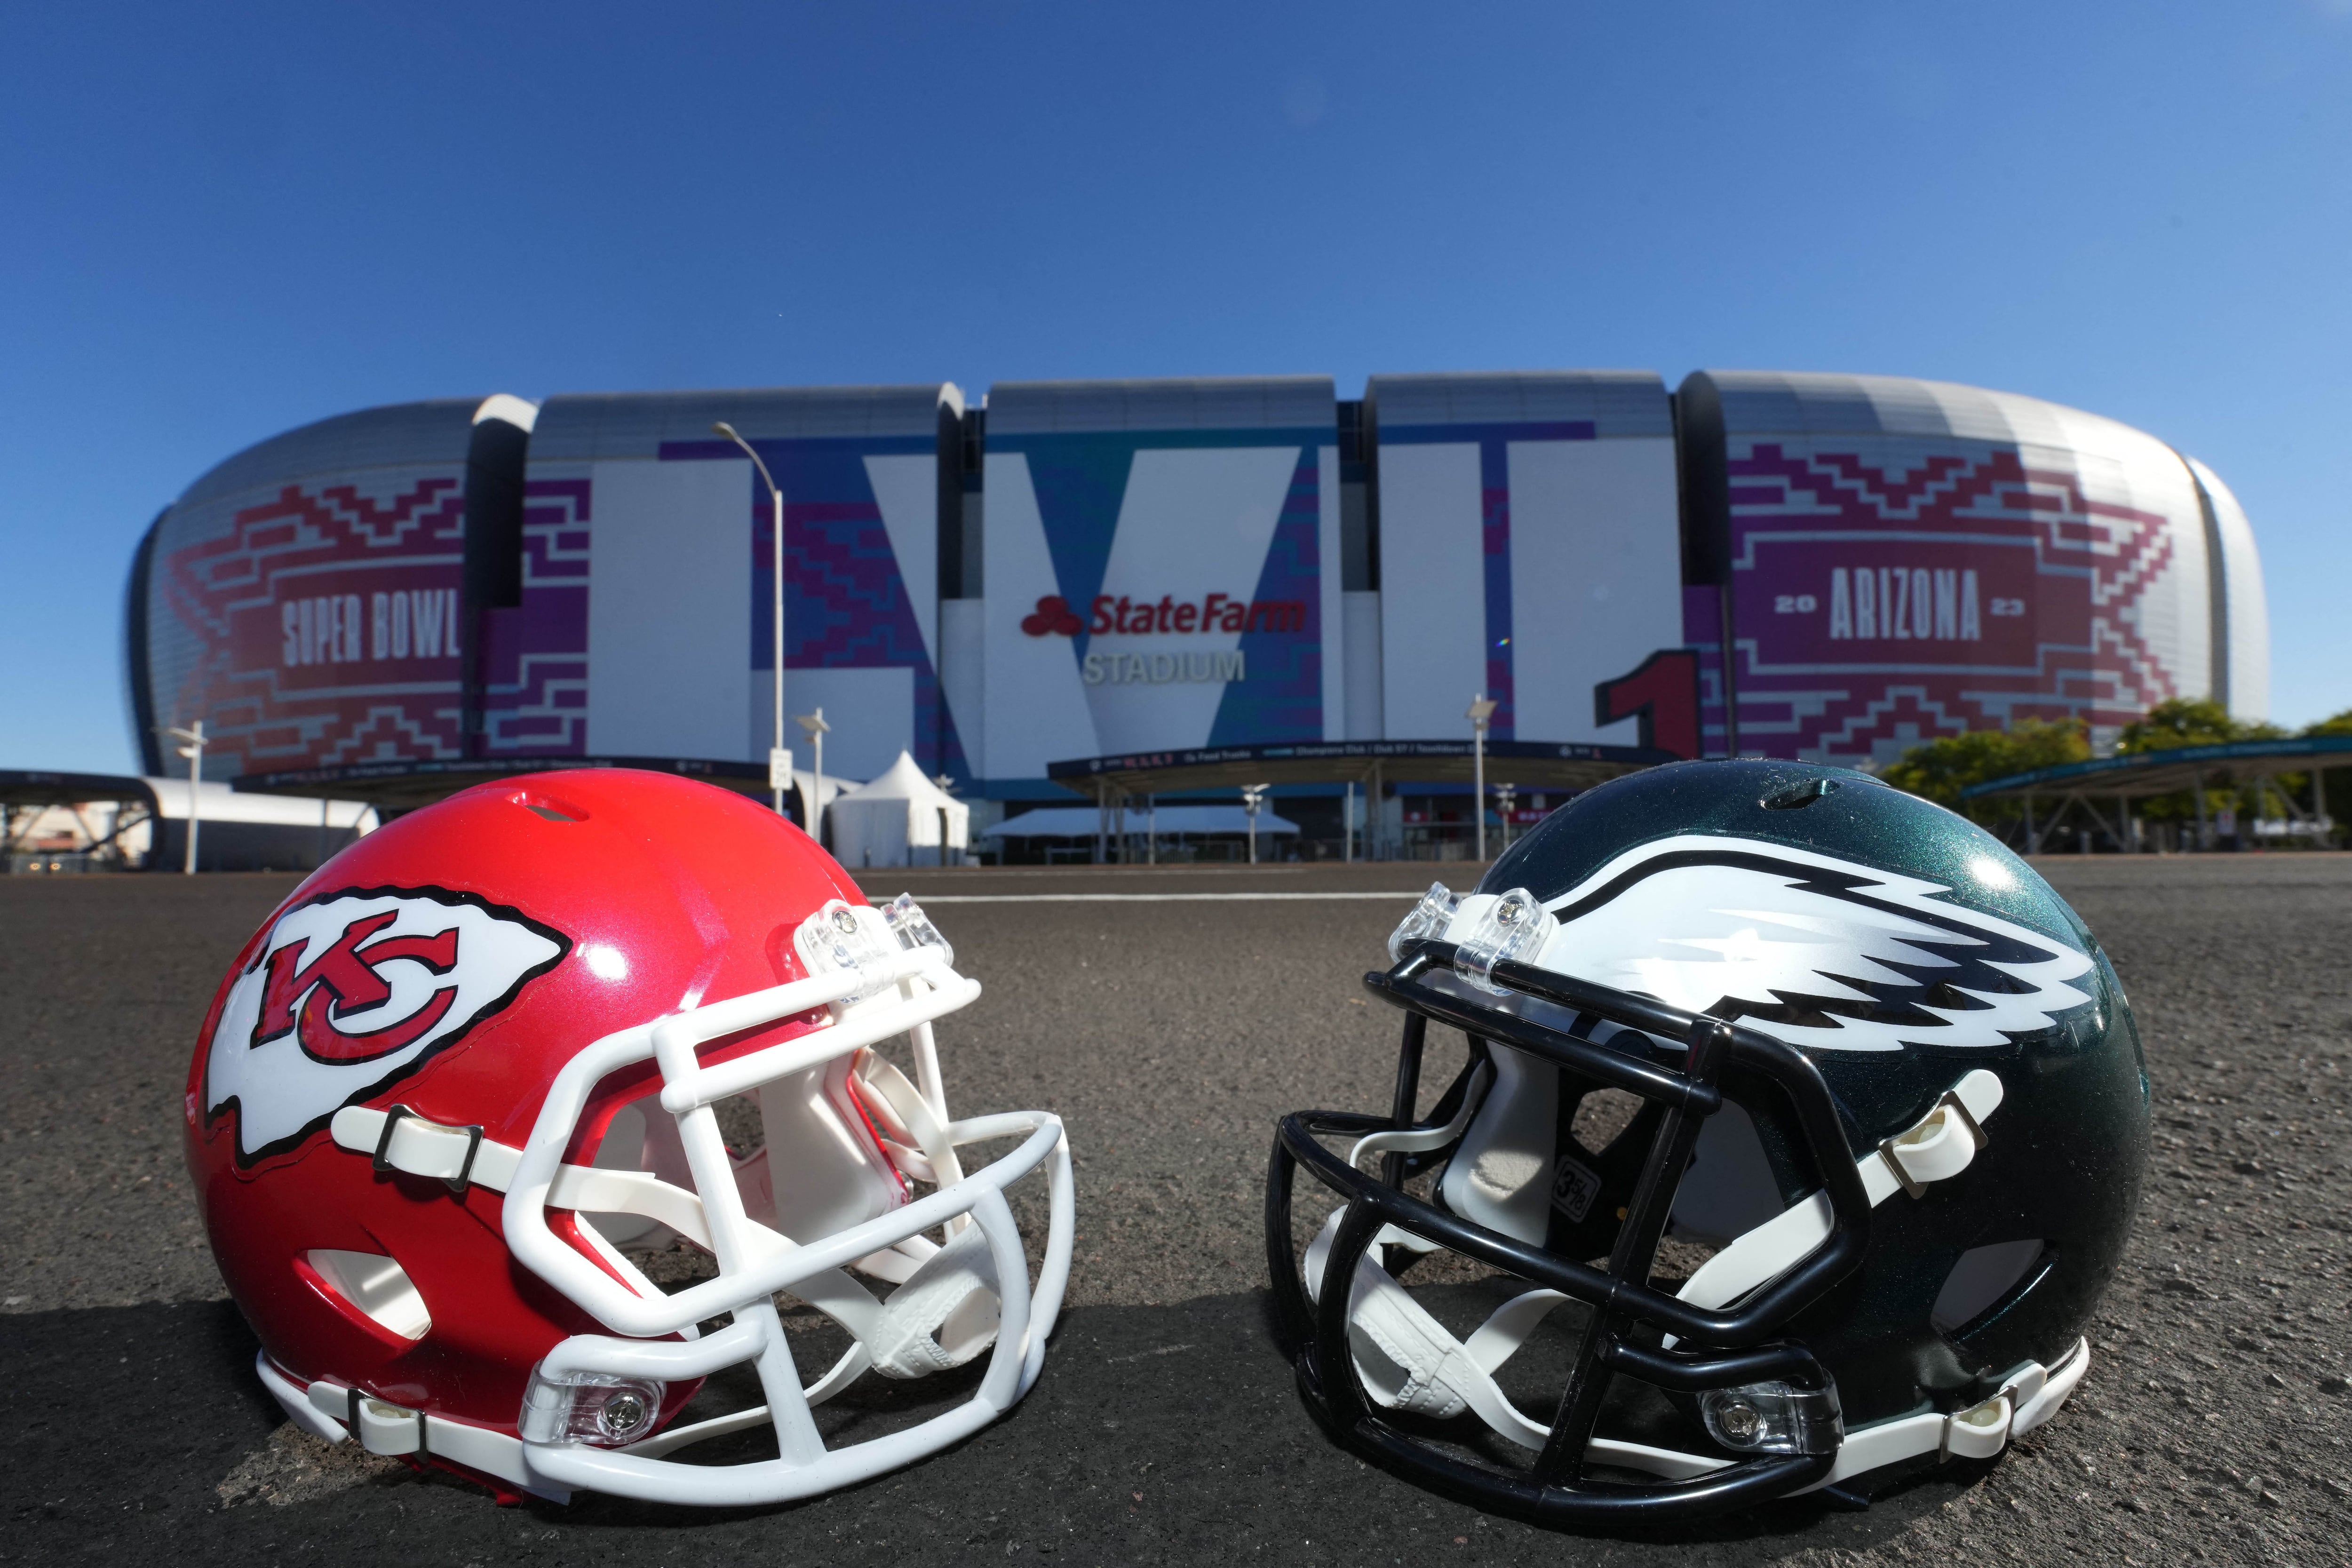 State Farm Stadium hosts its third Super Bowl